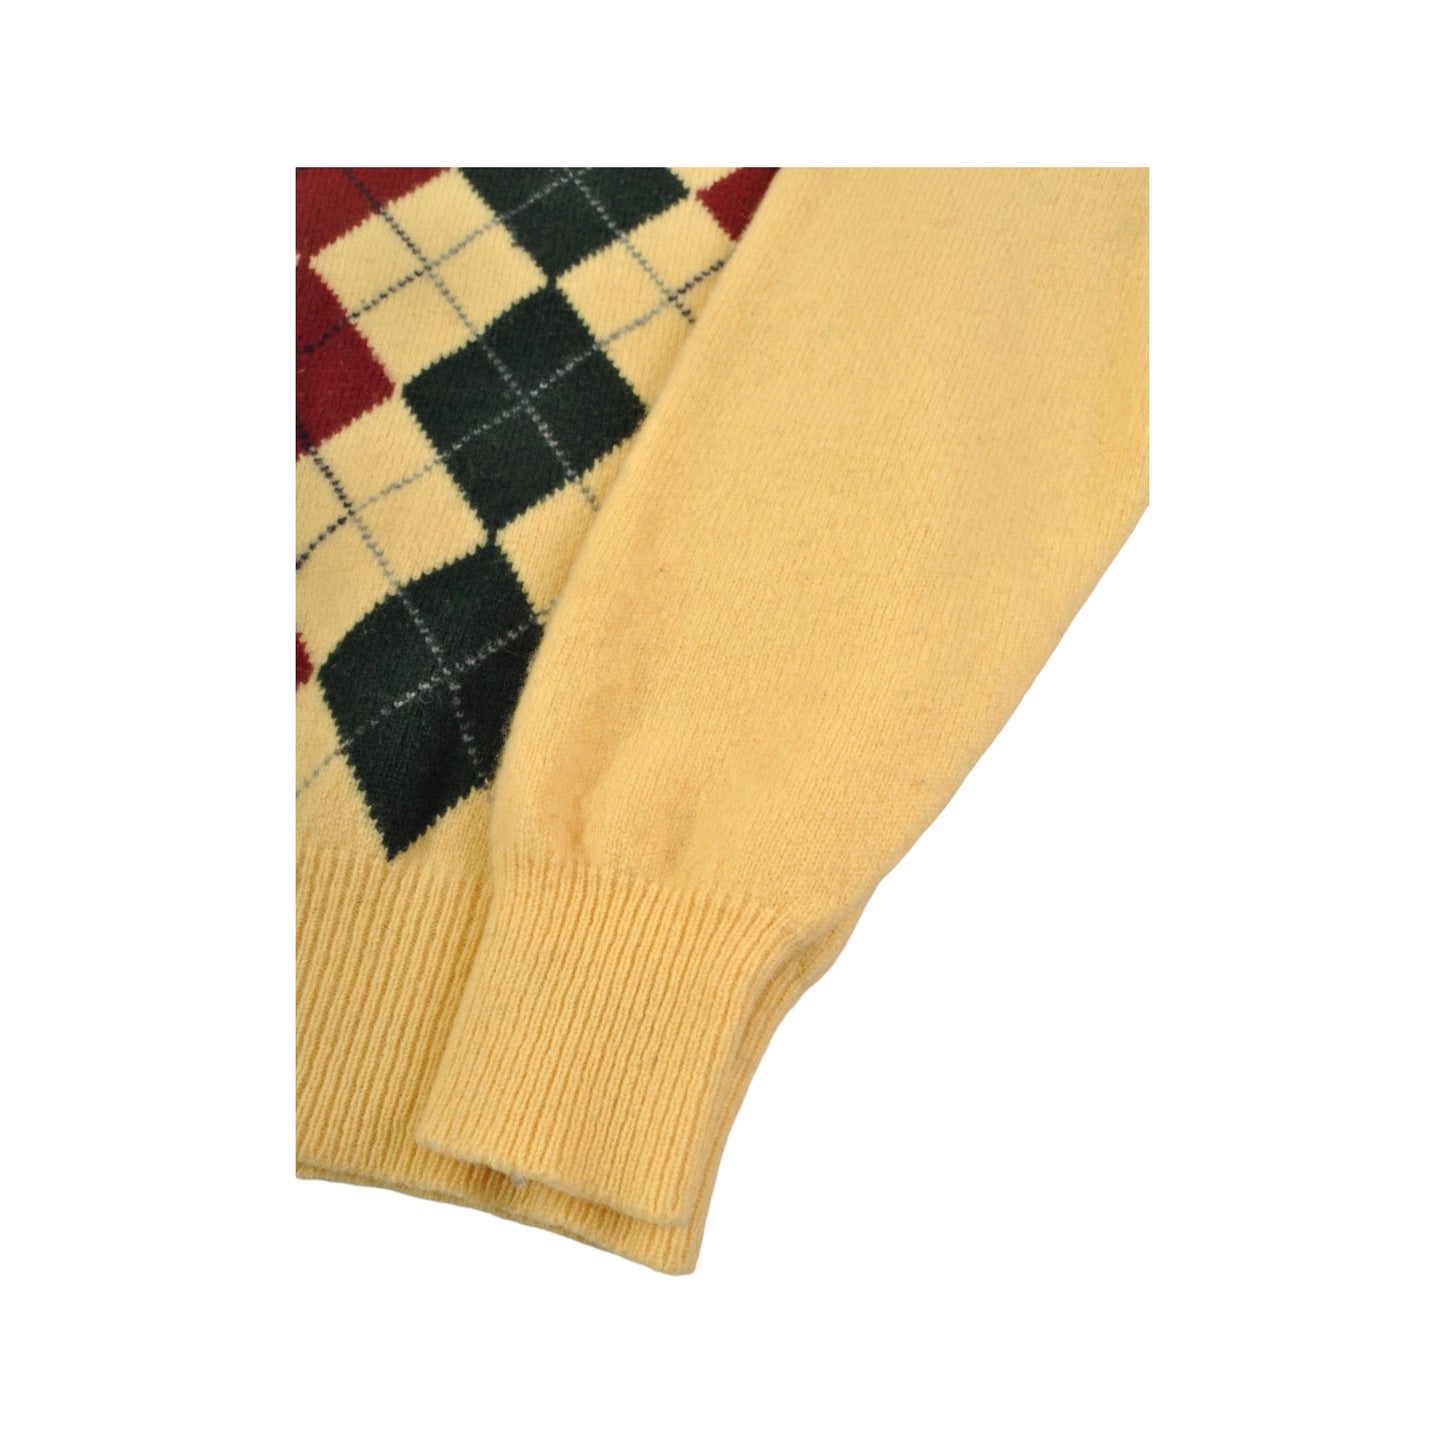 Vintage Knitted Jumper Retro Argyle Pattern Cream Ladies Medium